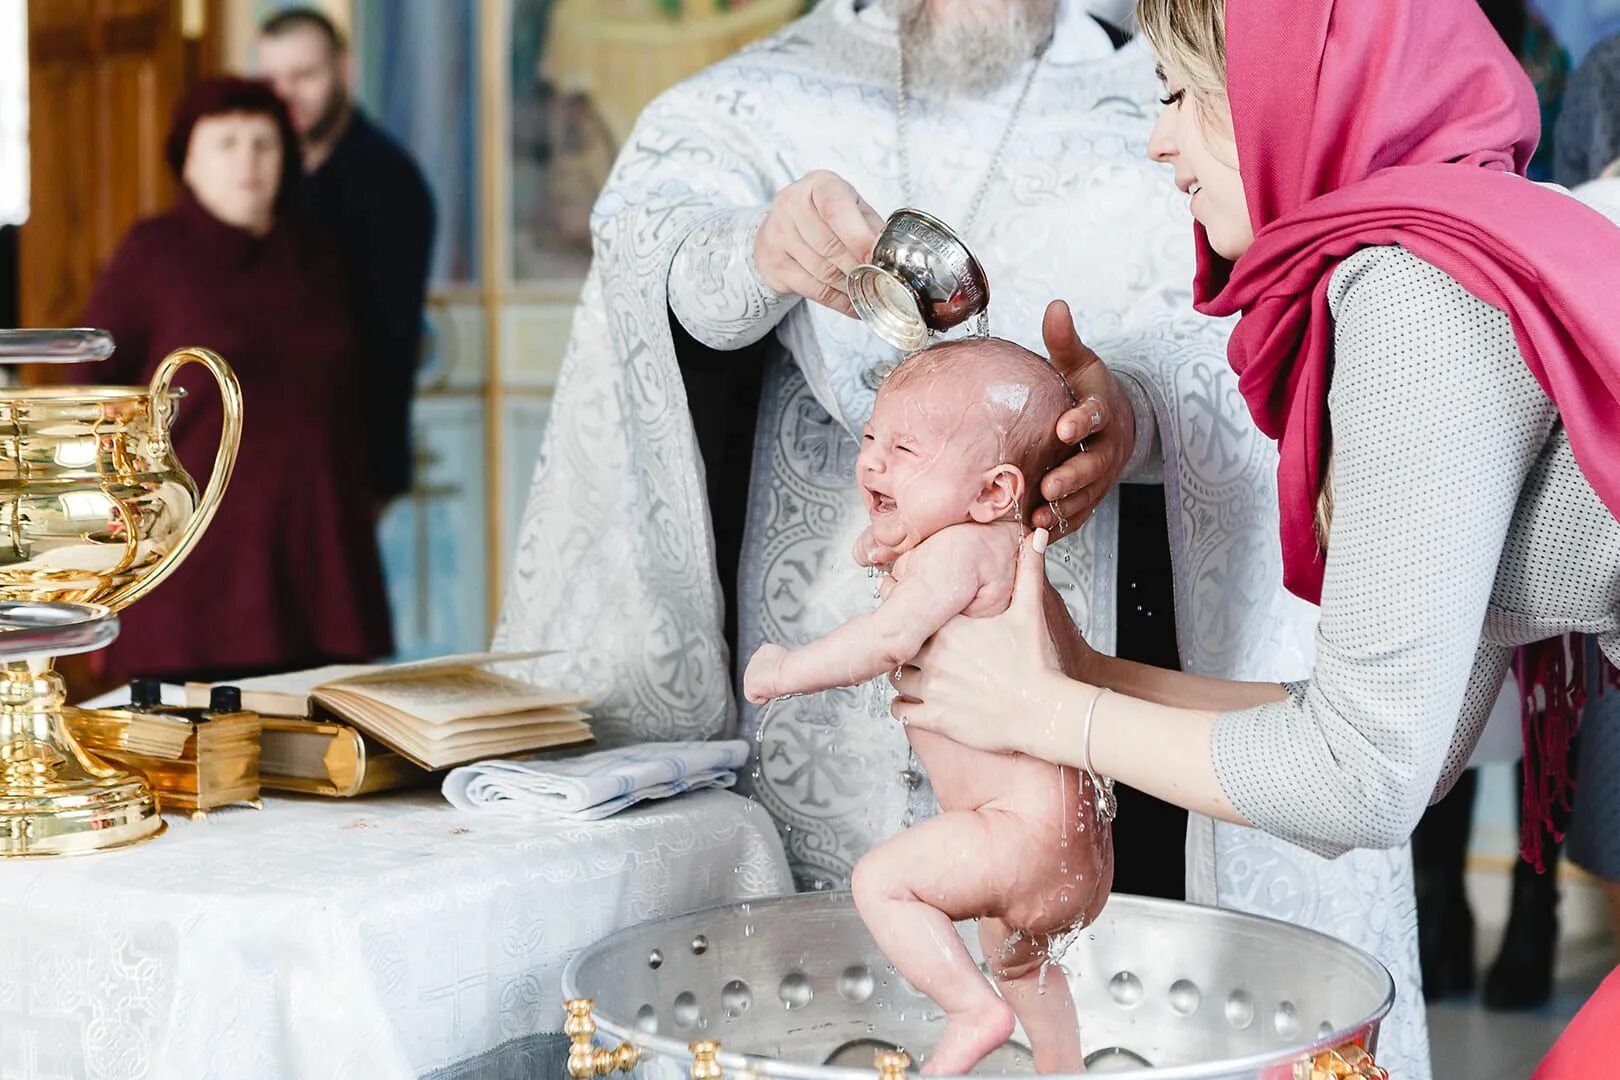 Крещение ребенка. Обряд крещения. Фотосессия на крестины ребенка. Таинство крещения фотосессия. После крещения младенца